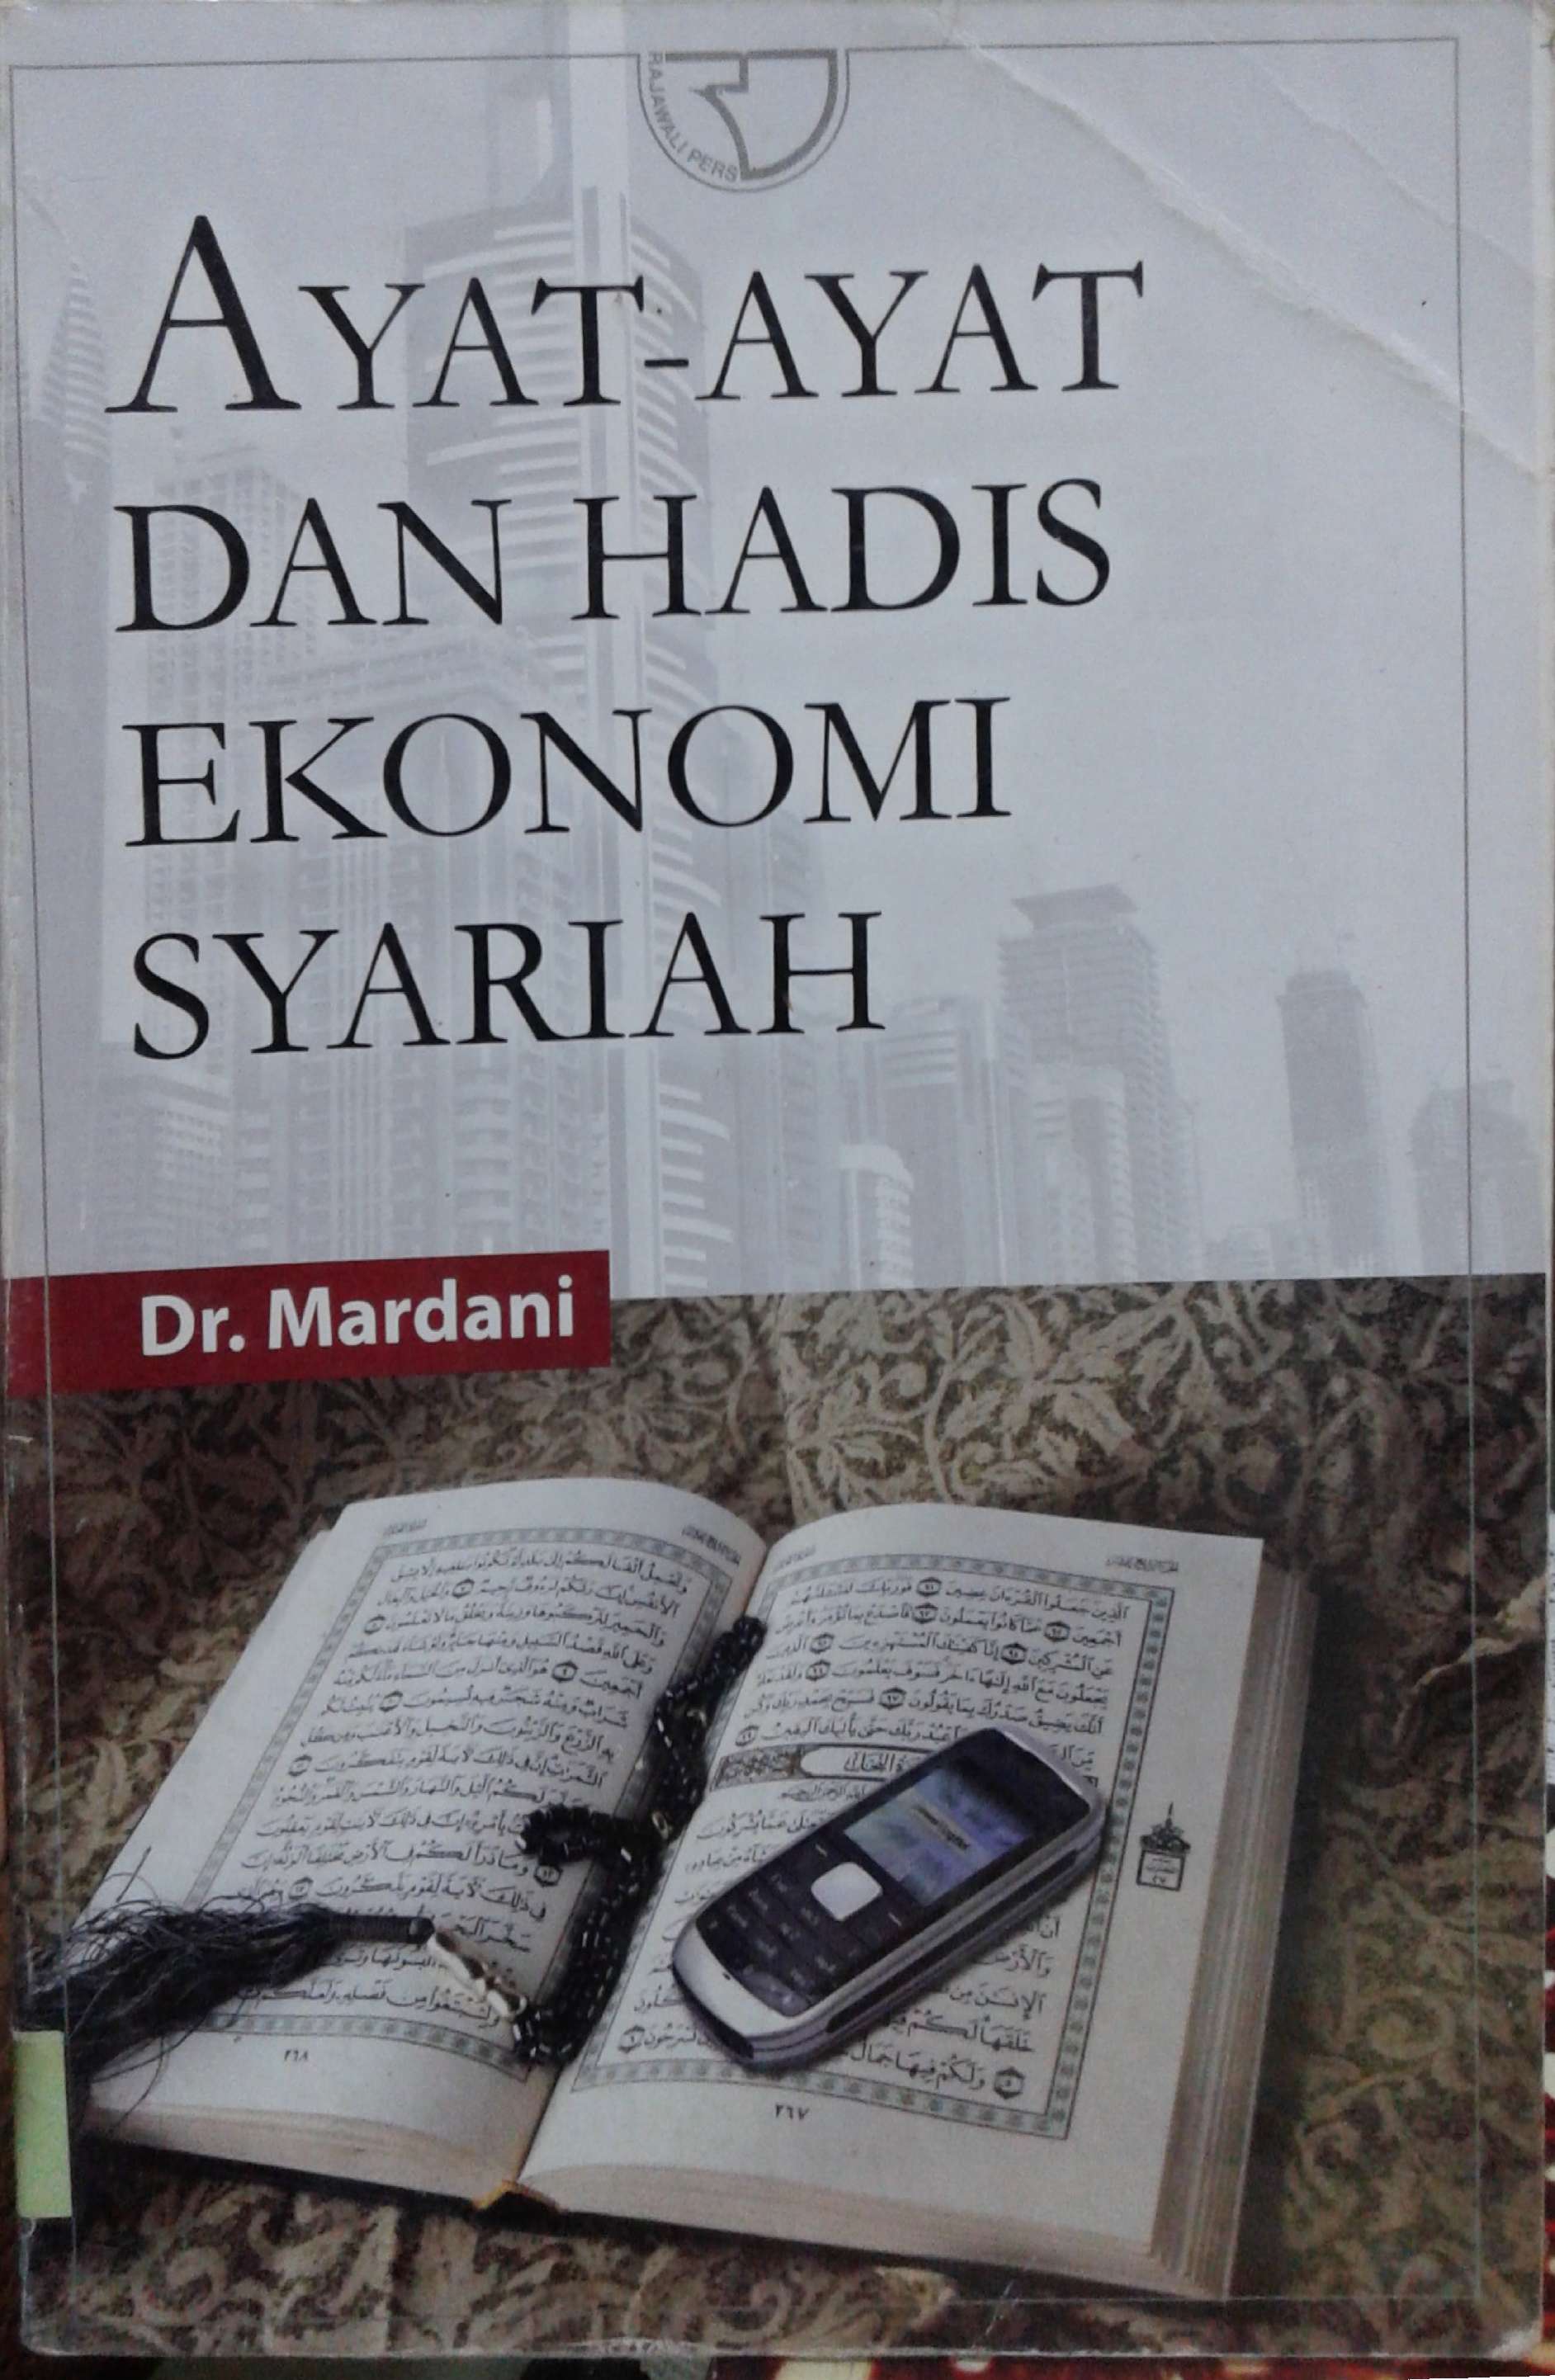 Ayat-ayat dan Hadits Ekonomi Syari'ah